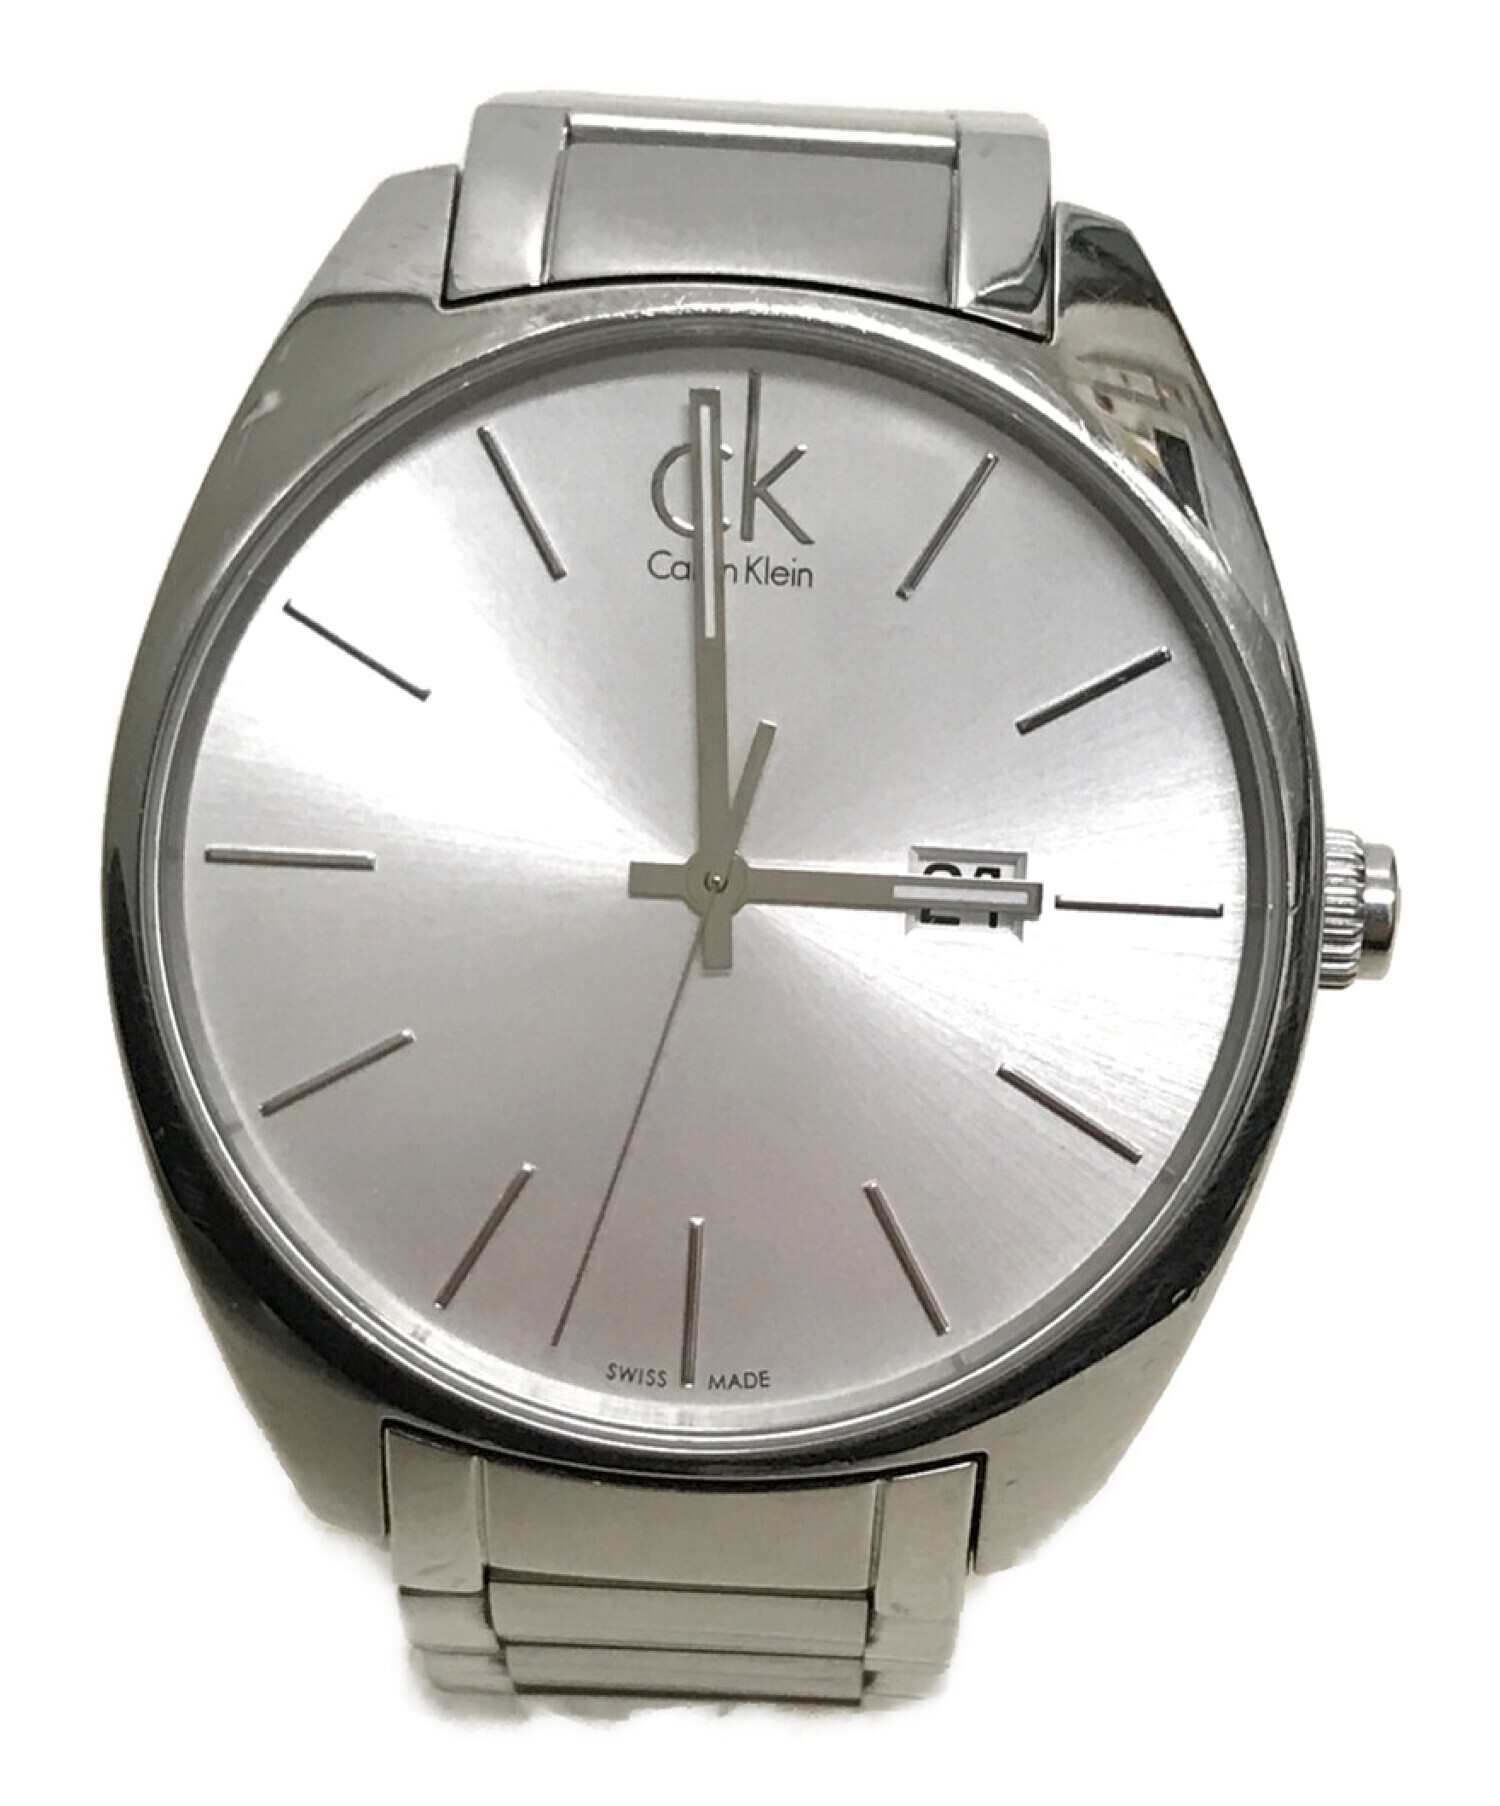 Calvin Klein (カルバンクライン) 腕時計 サイズ:下記参照